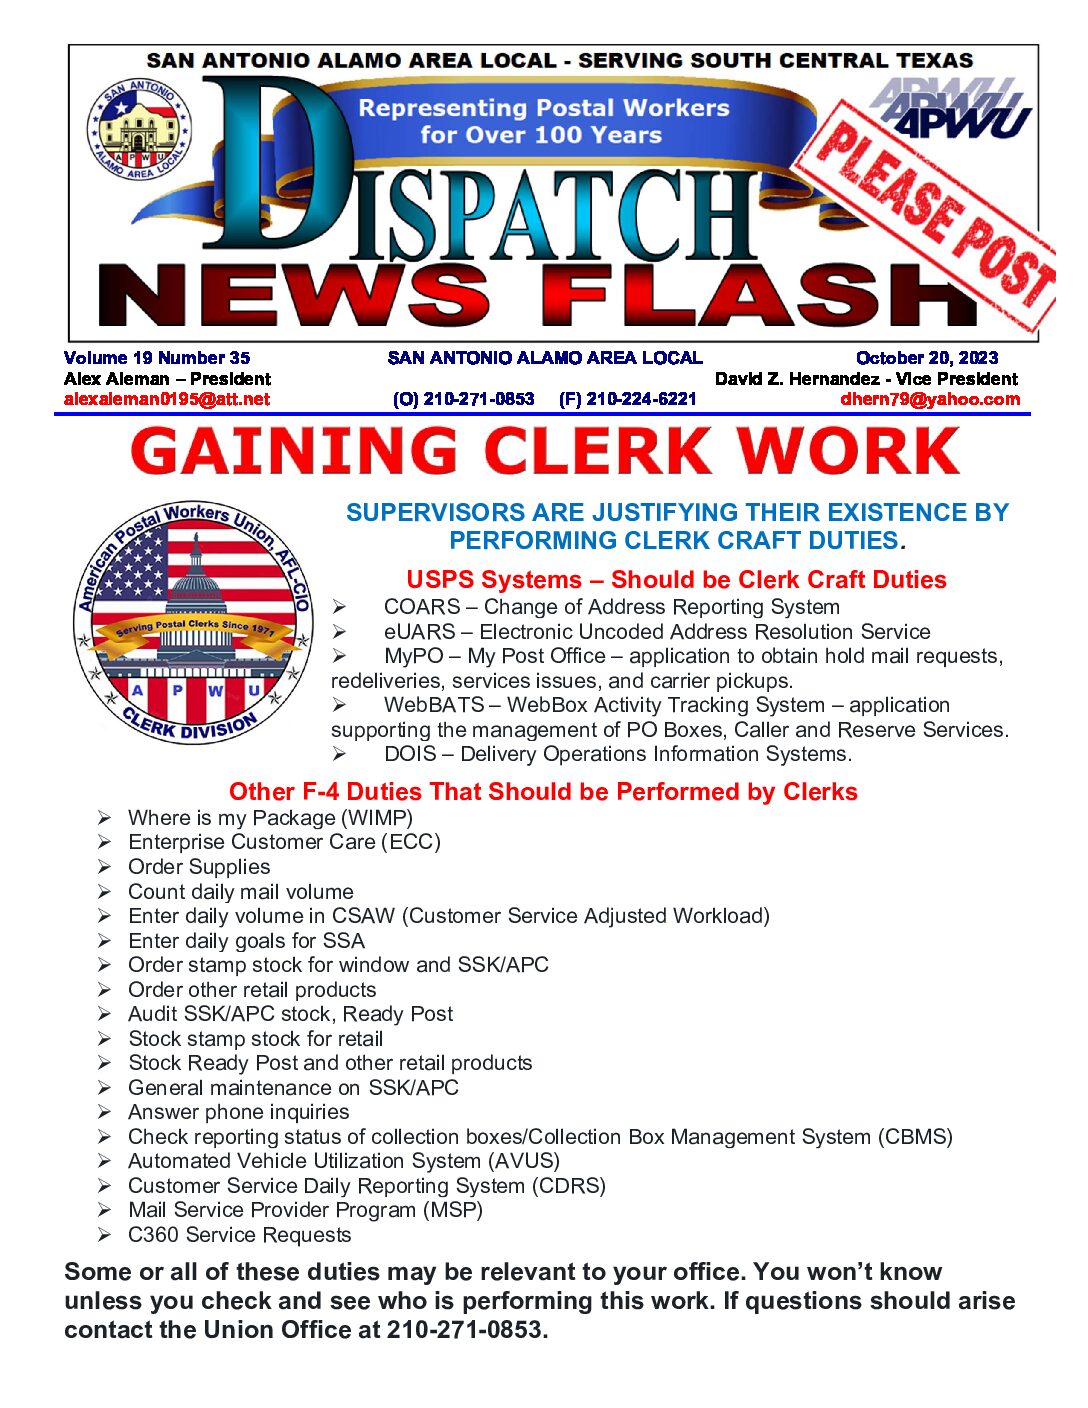 NewsFlash 19-35 Gaining Clerk Work - 